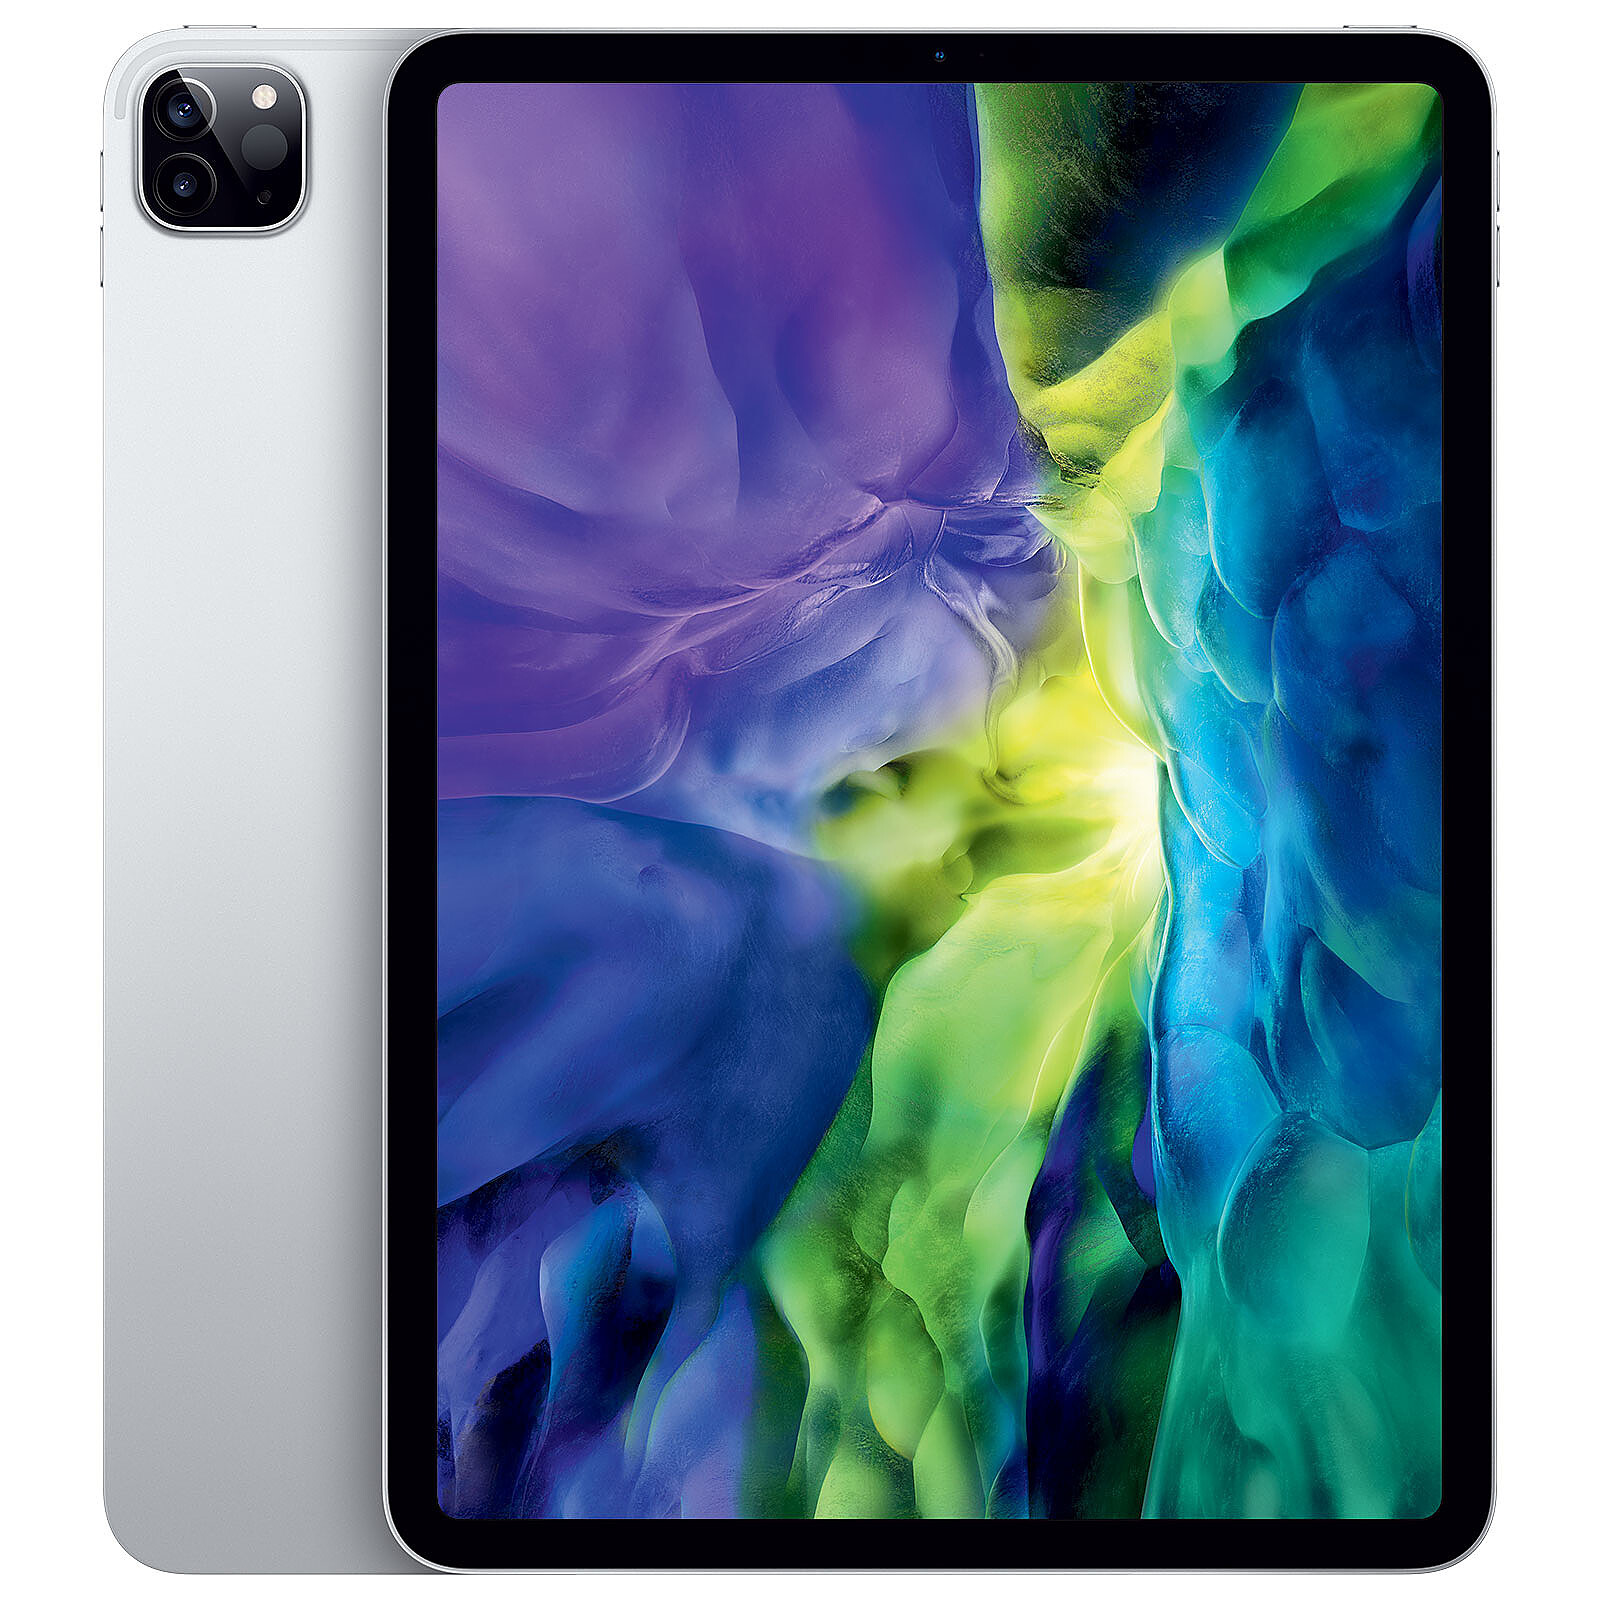 Apple iPad Pro (2020) 11-inch 256GB Wi-Fi Silver - Tablet computer